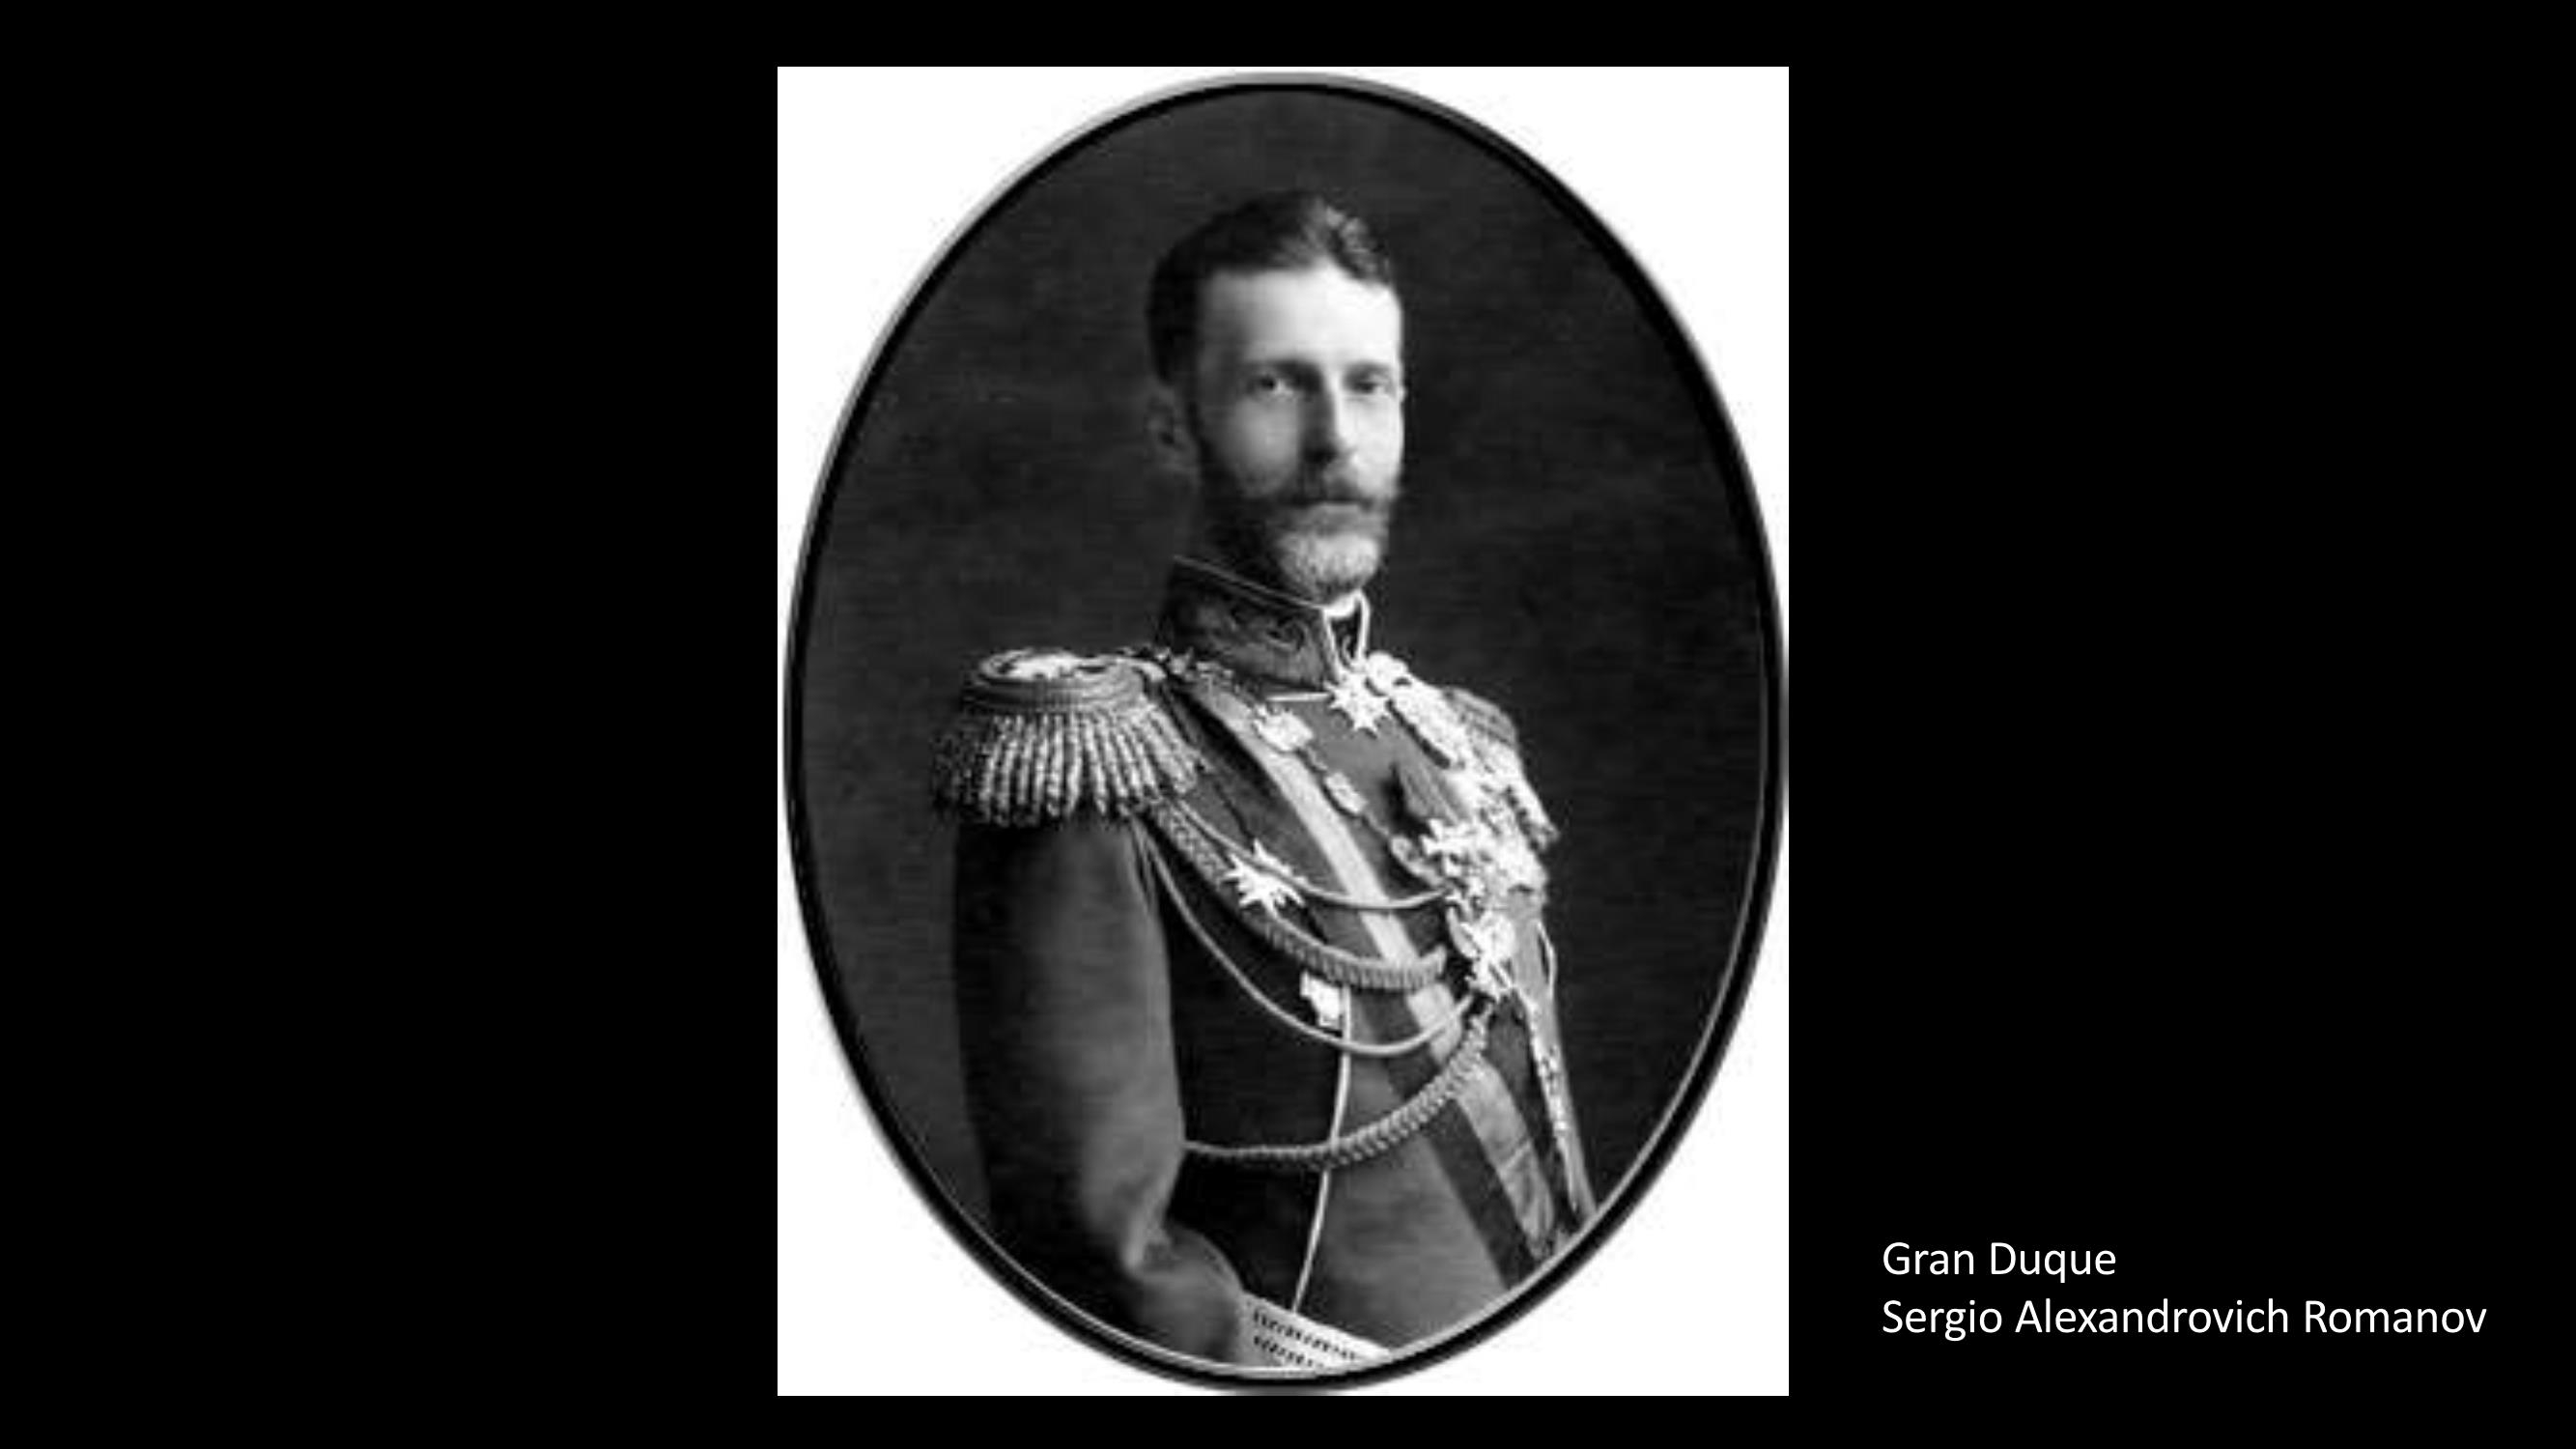 [6] Gran Duque Sergio Alexandrovich Romanov